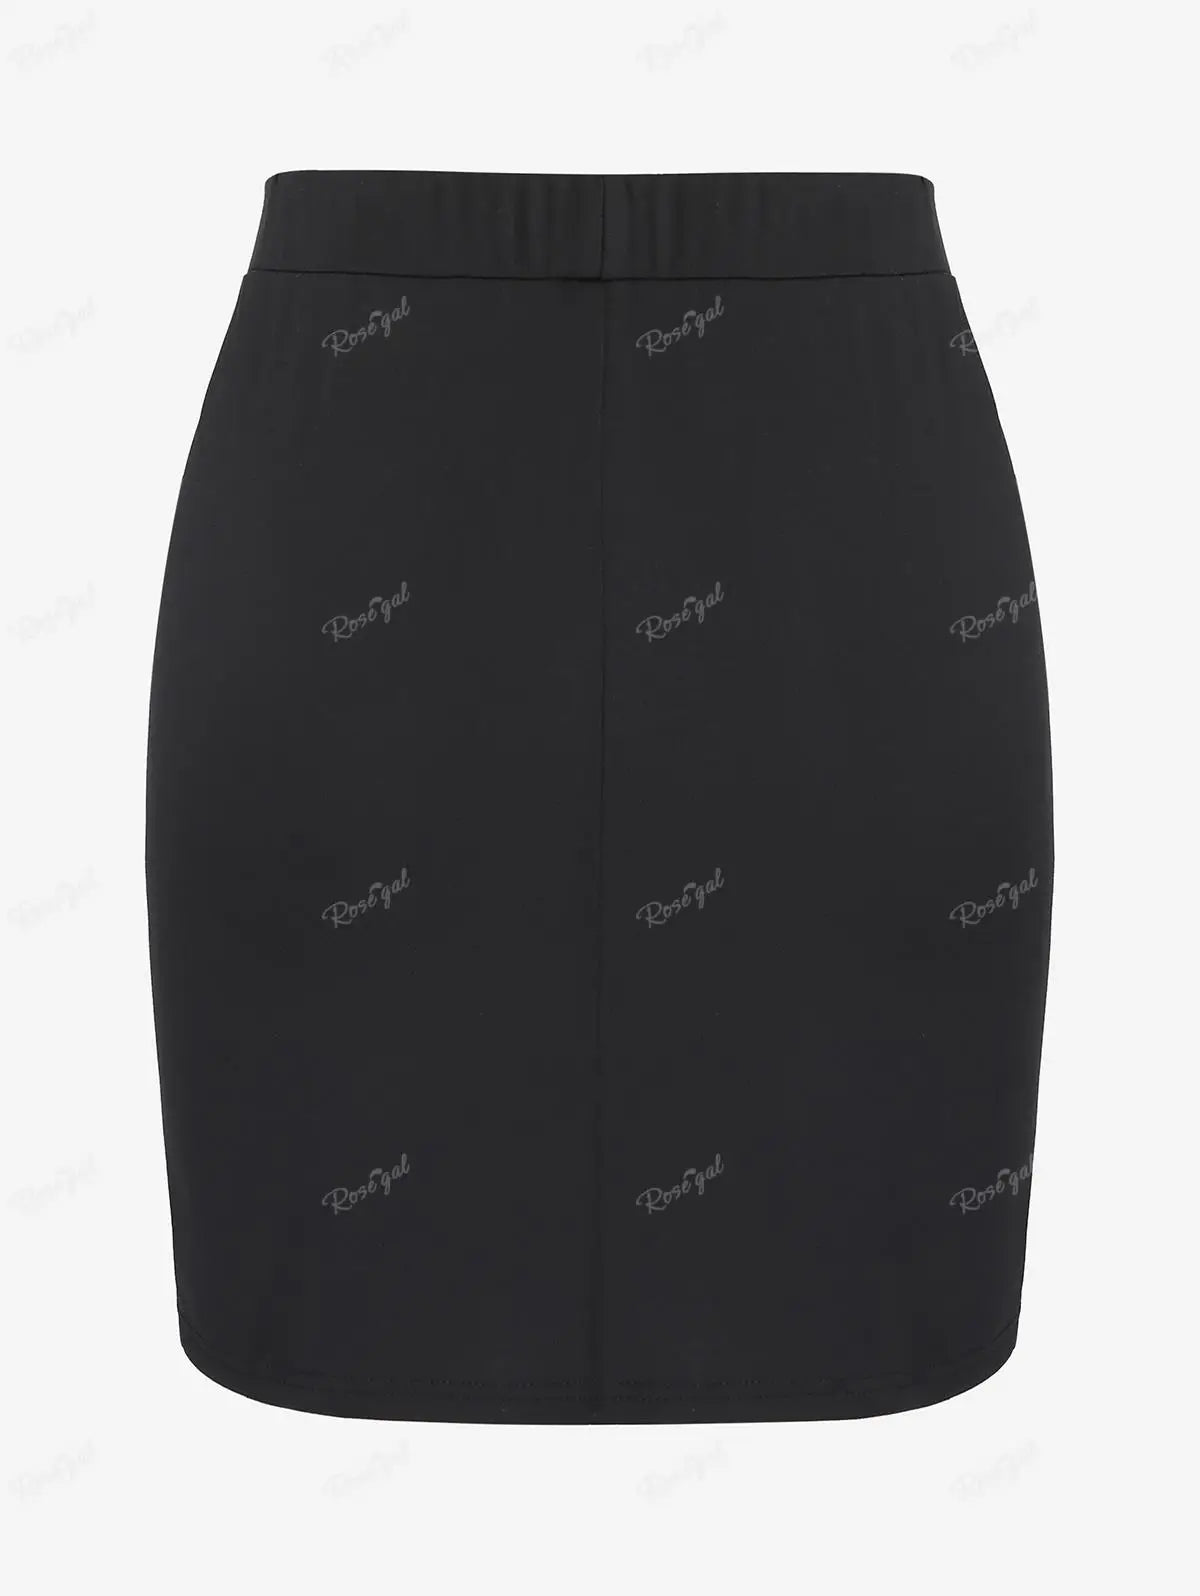 ROSEGAL Plus Size Black Split Skirt | Women's Casual Elastic Waist Buckle Sheath Bottoms